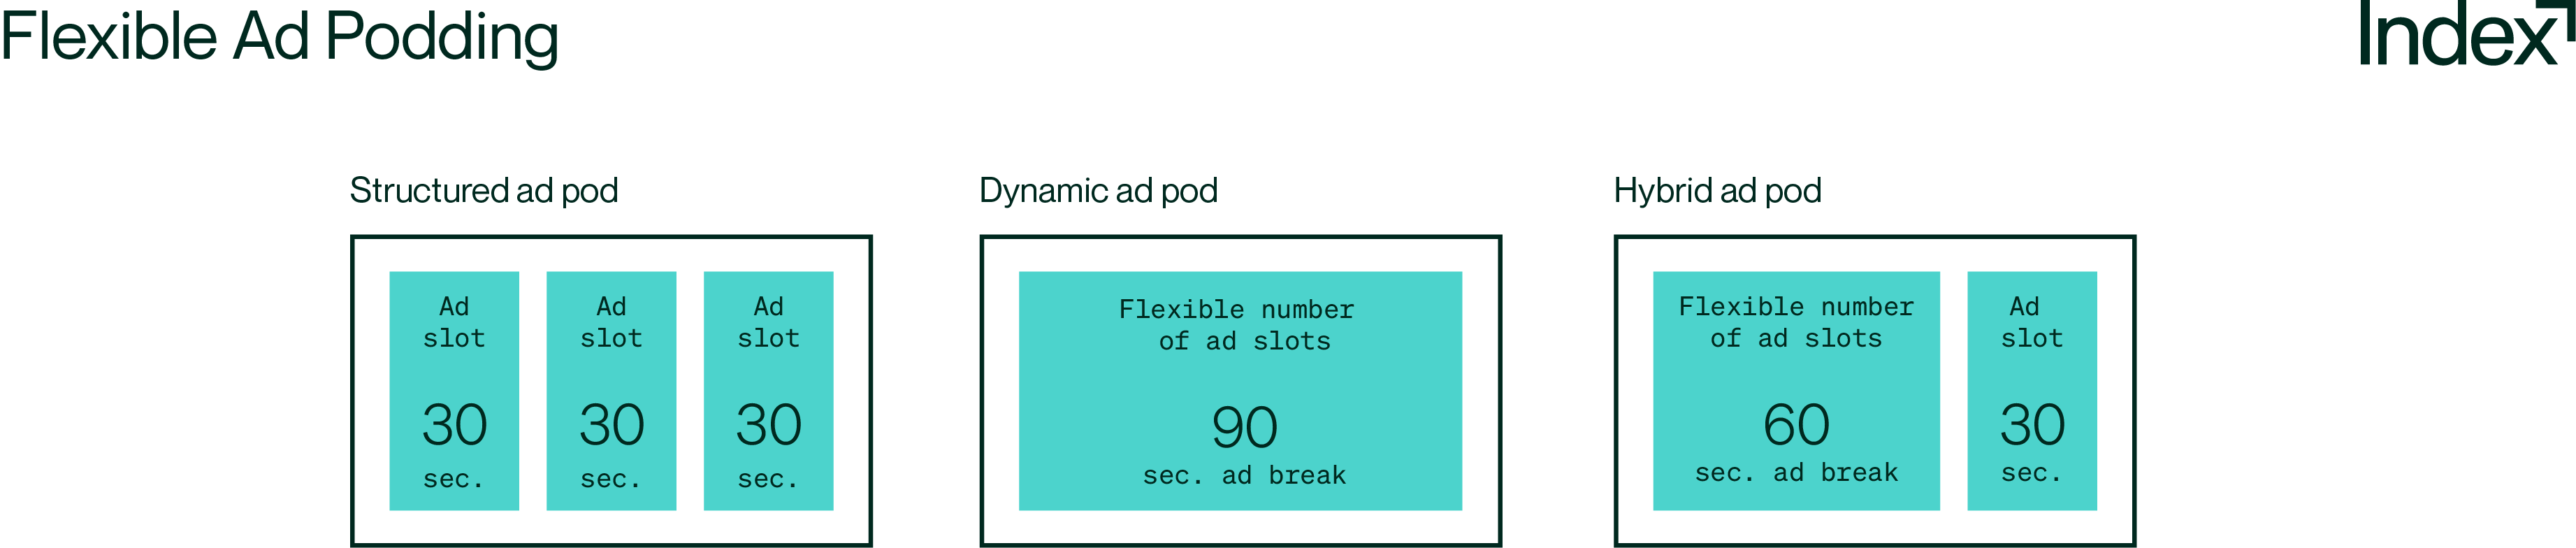 Flexible ad podding diagram 